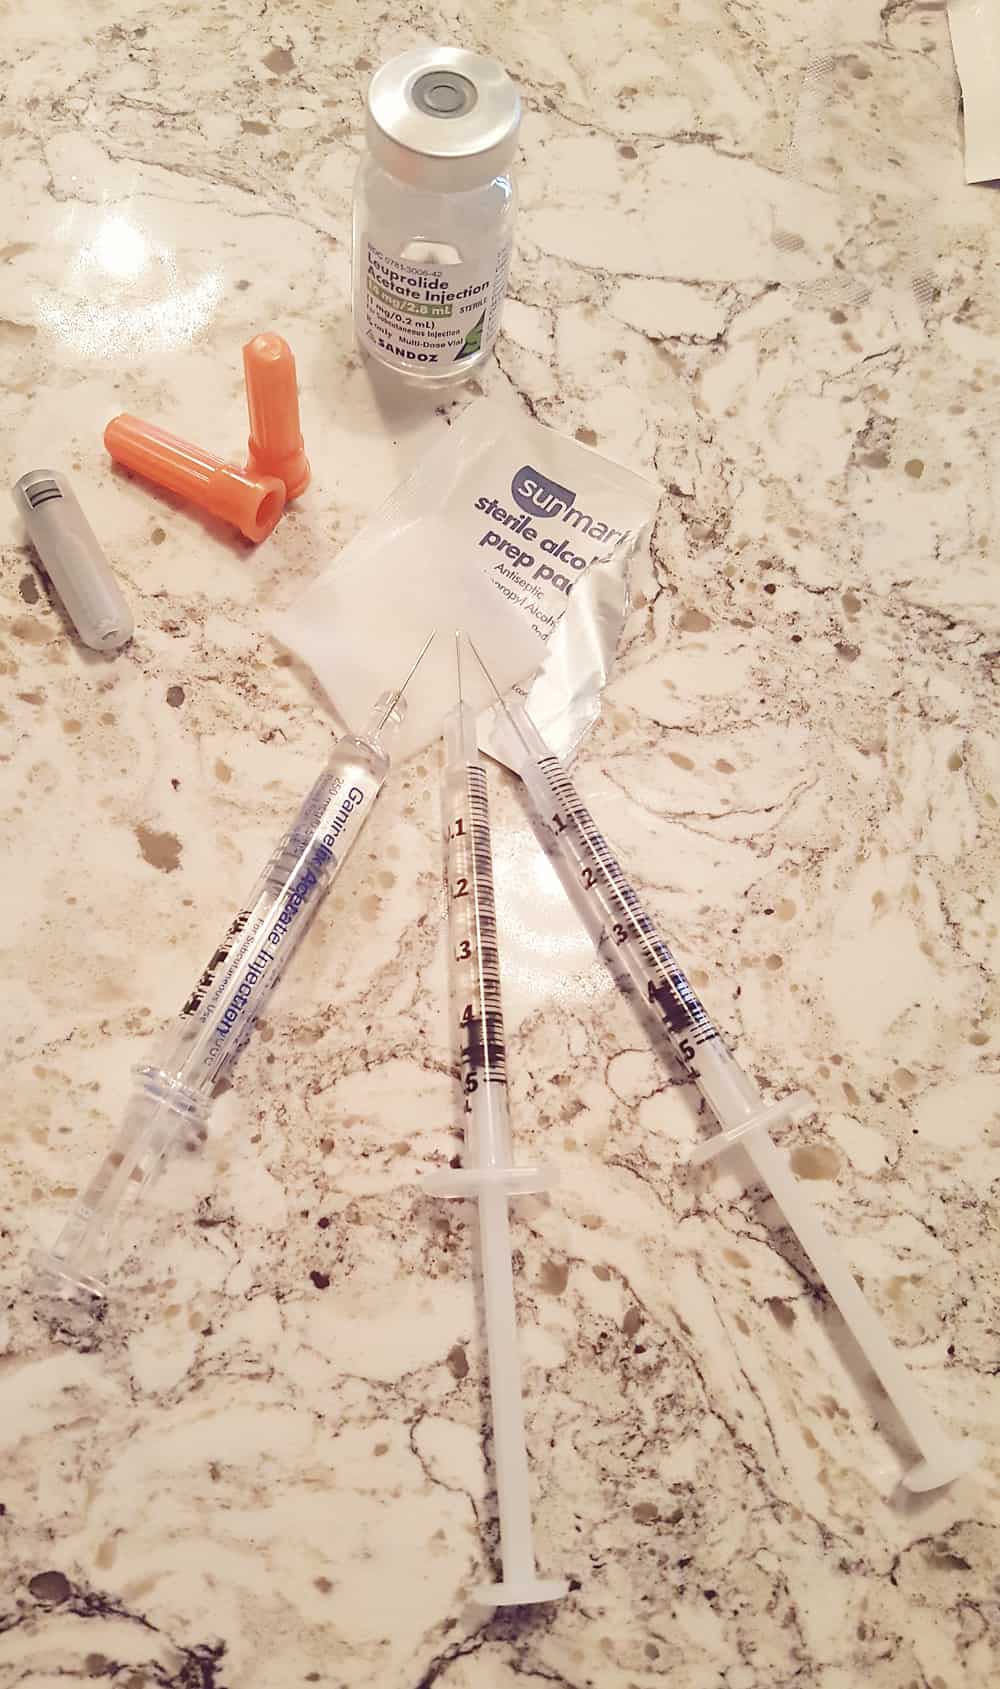 IVF Lupron trigger shots!